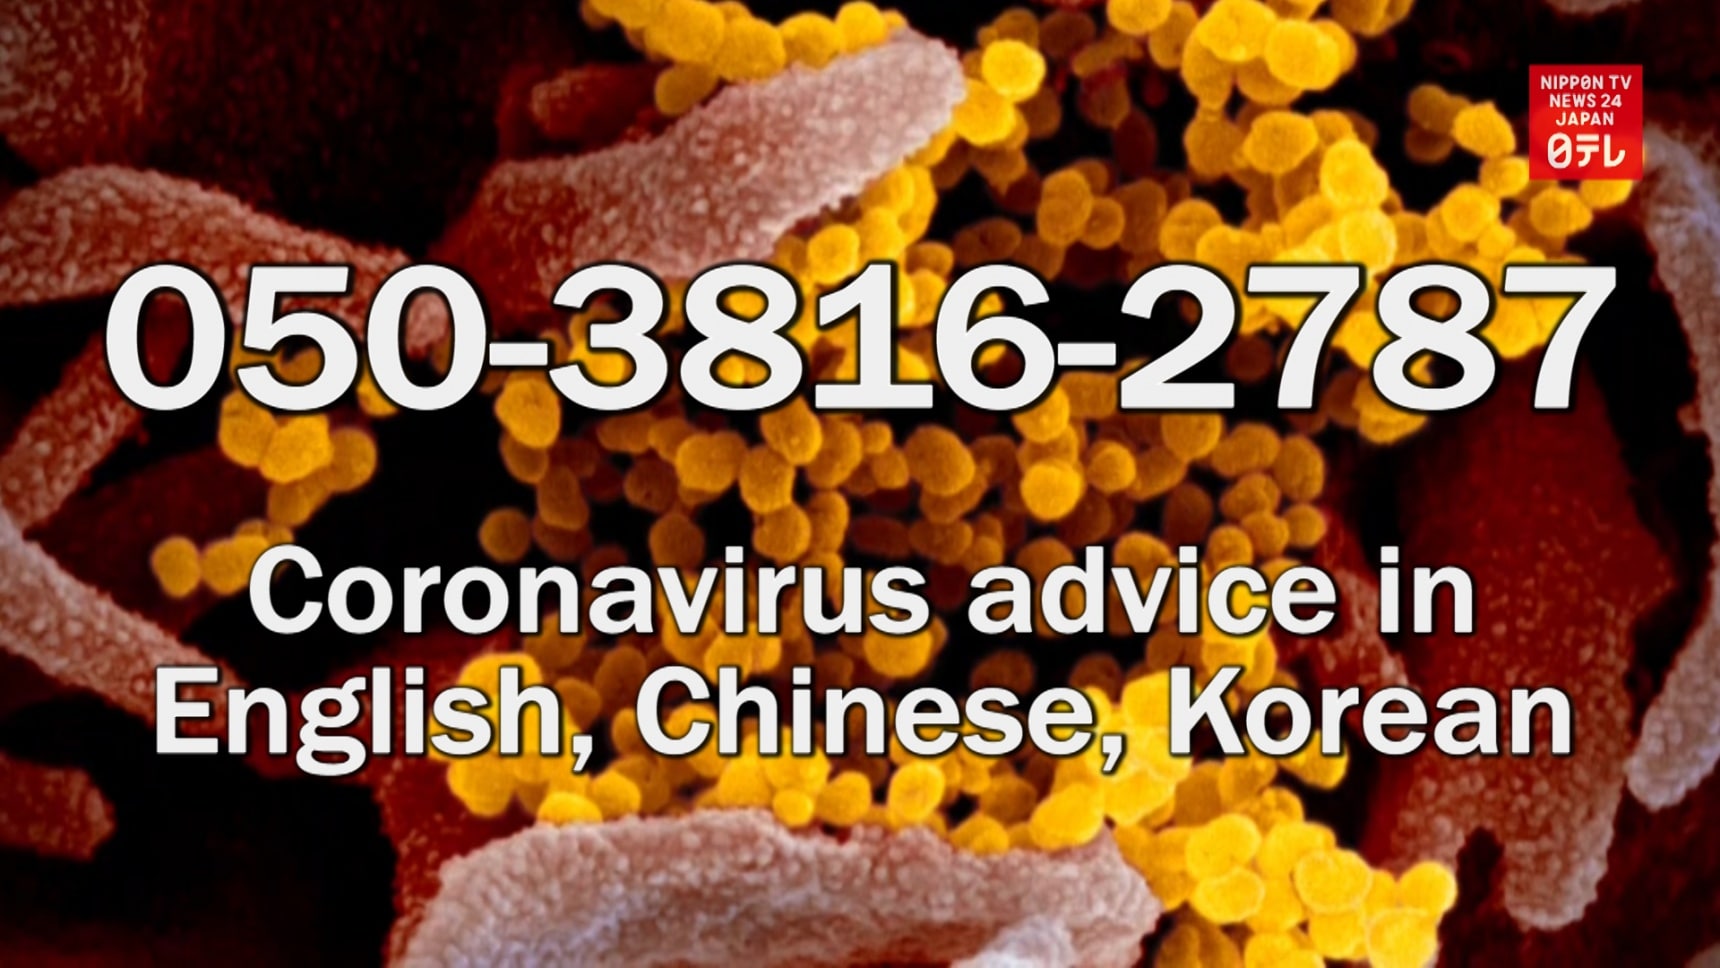 JNTO Multilingual Coronavirus Hotline